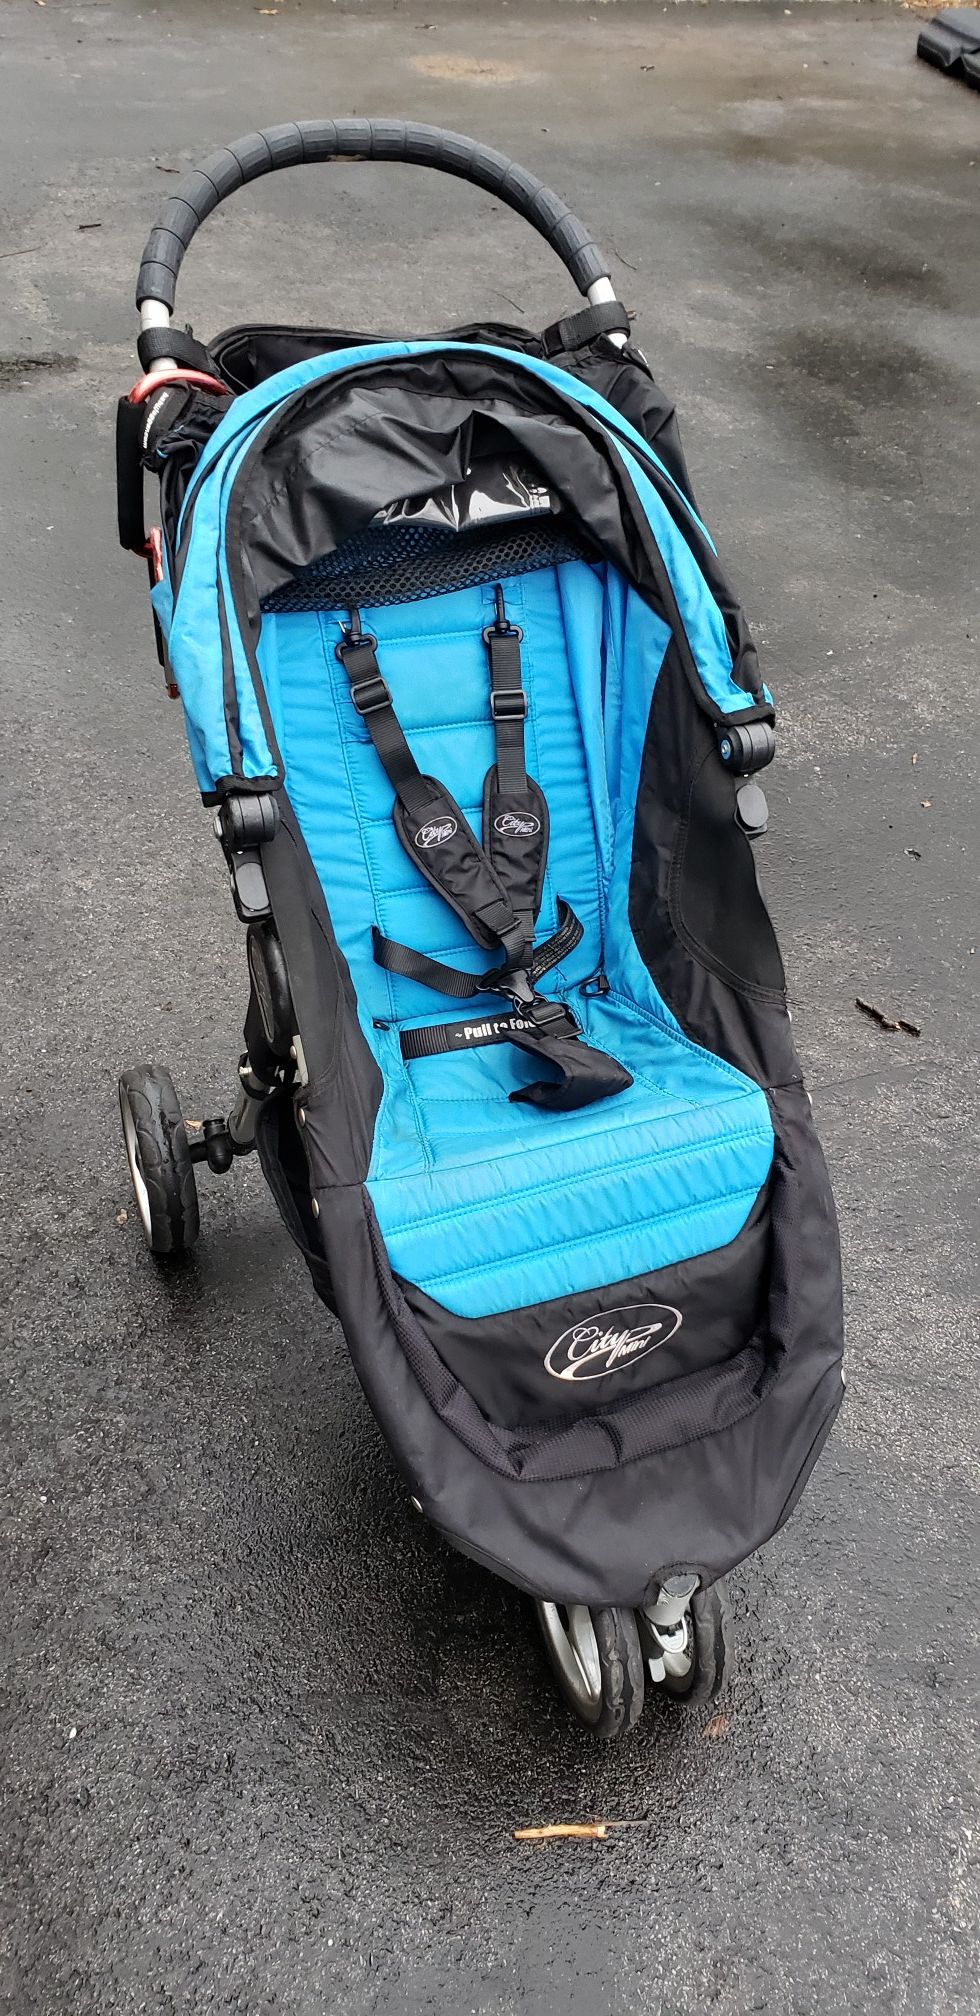 Baby Jogger City Mini stroller